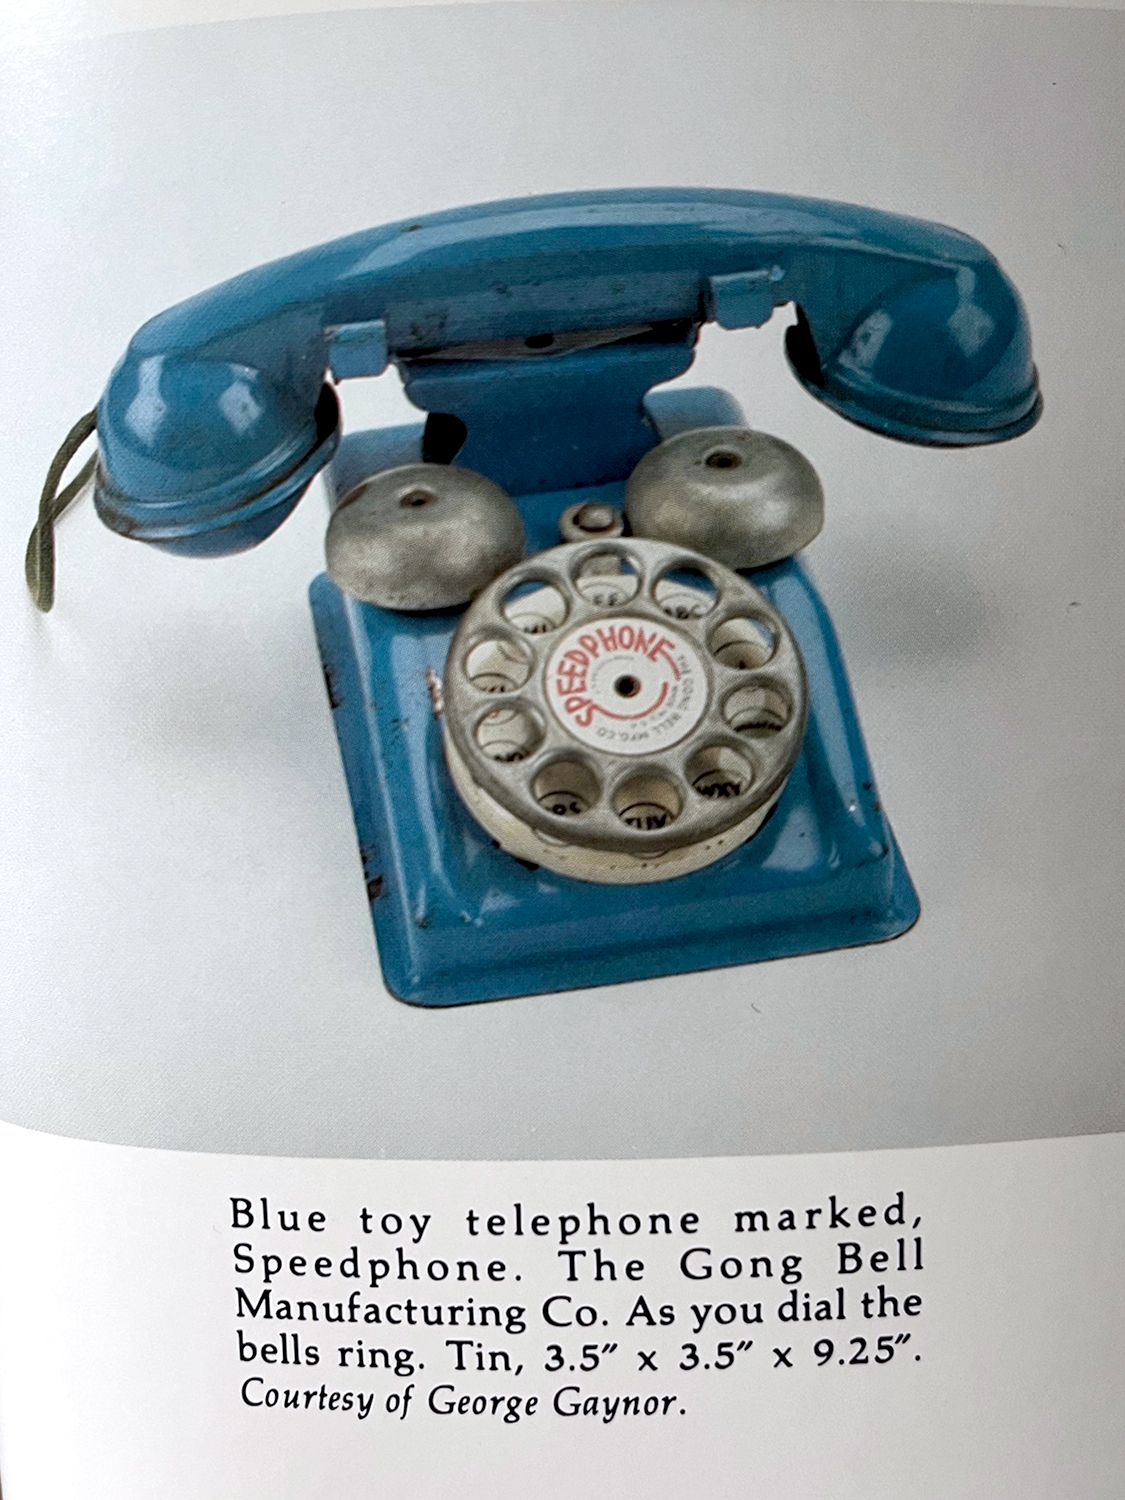 Telephone Collecting (Seven Decades of Design) - Kate E. Dooner